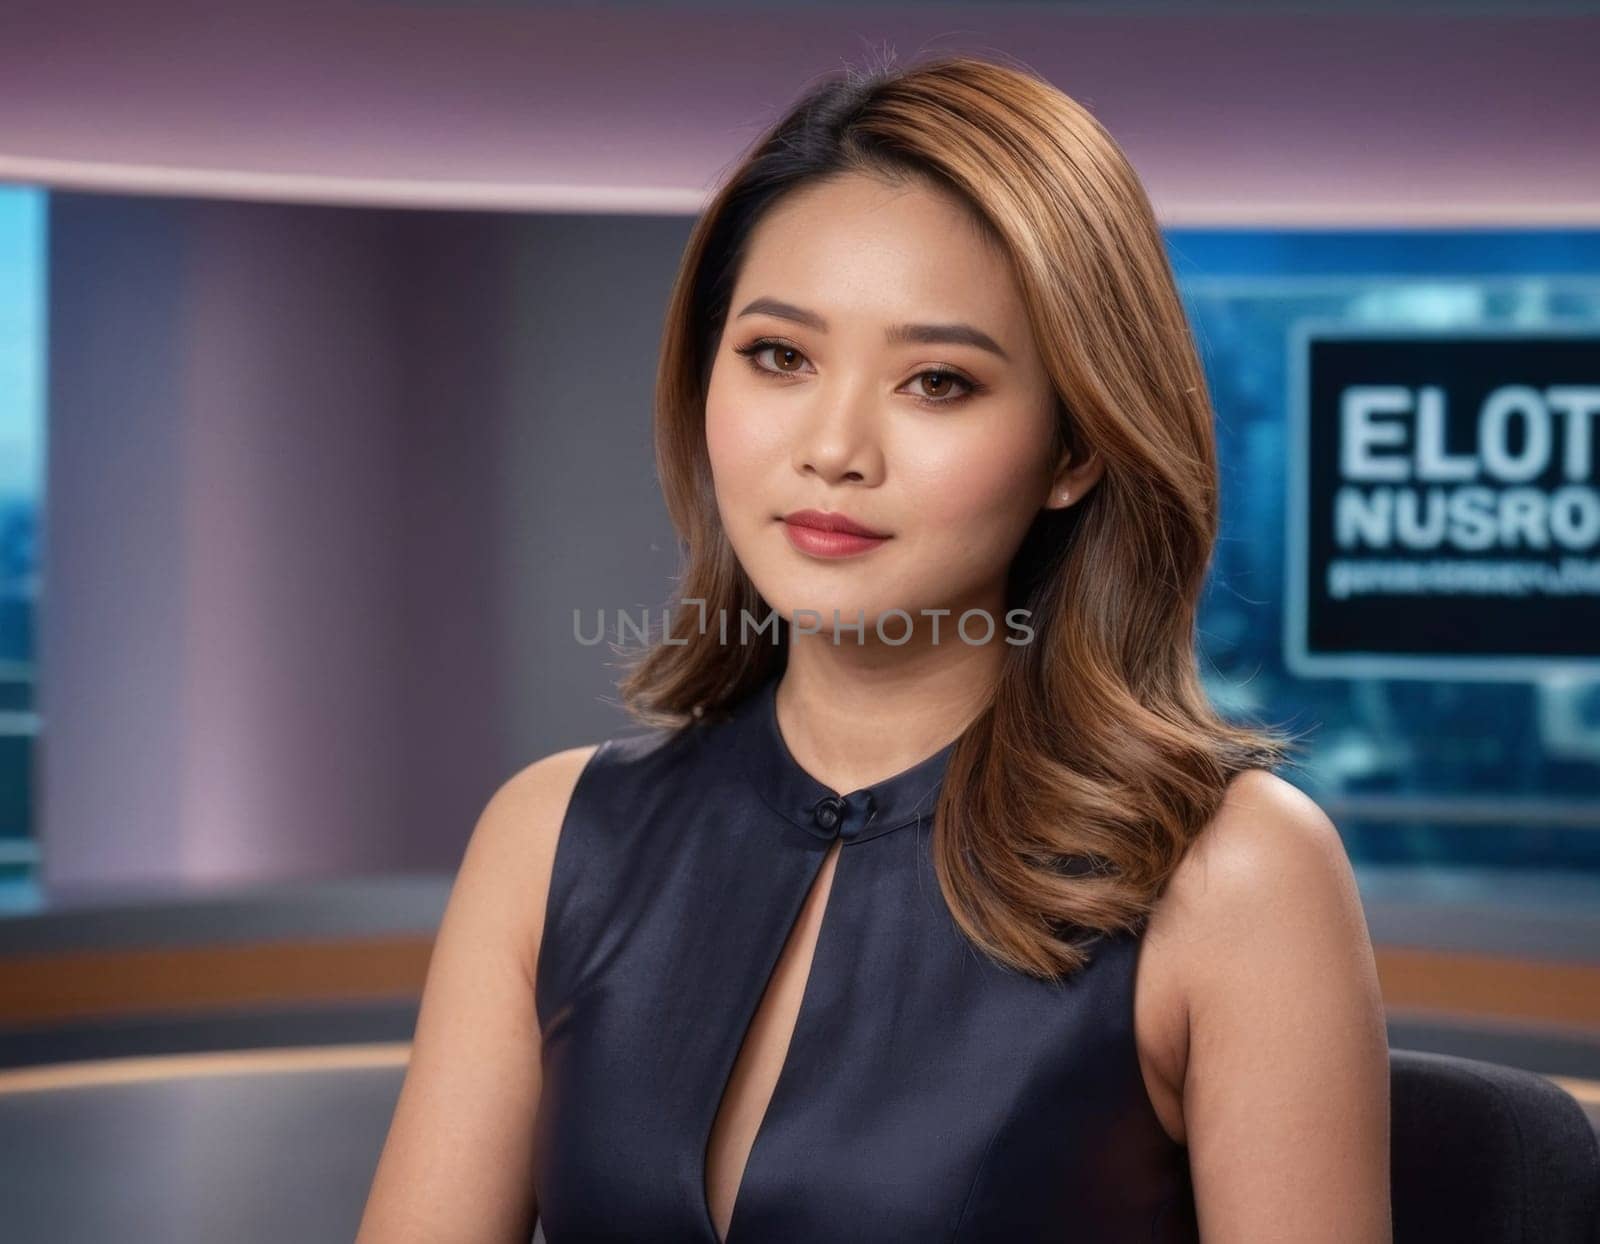 Asian woman daily news anchor. AI generation